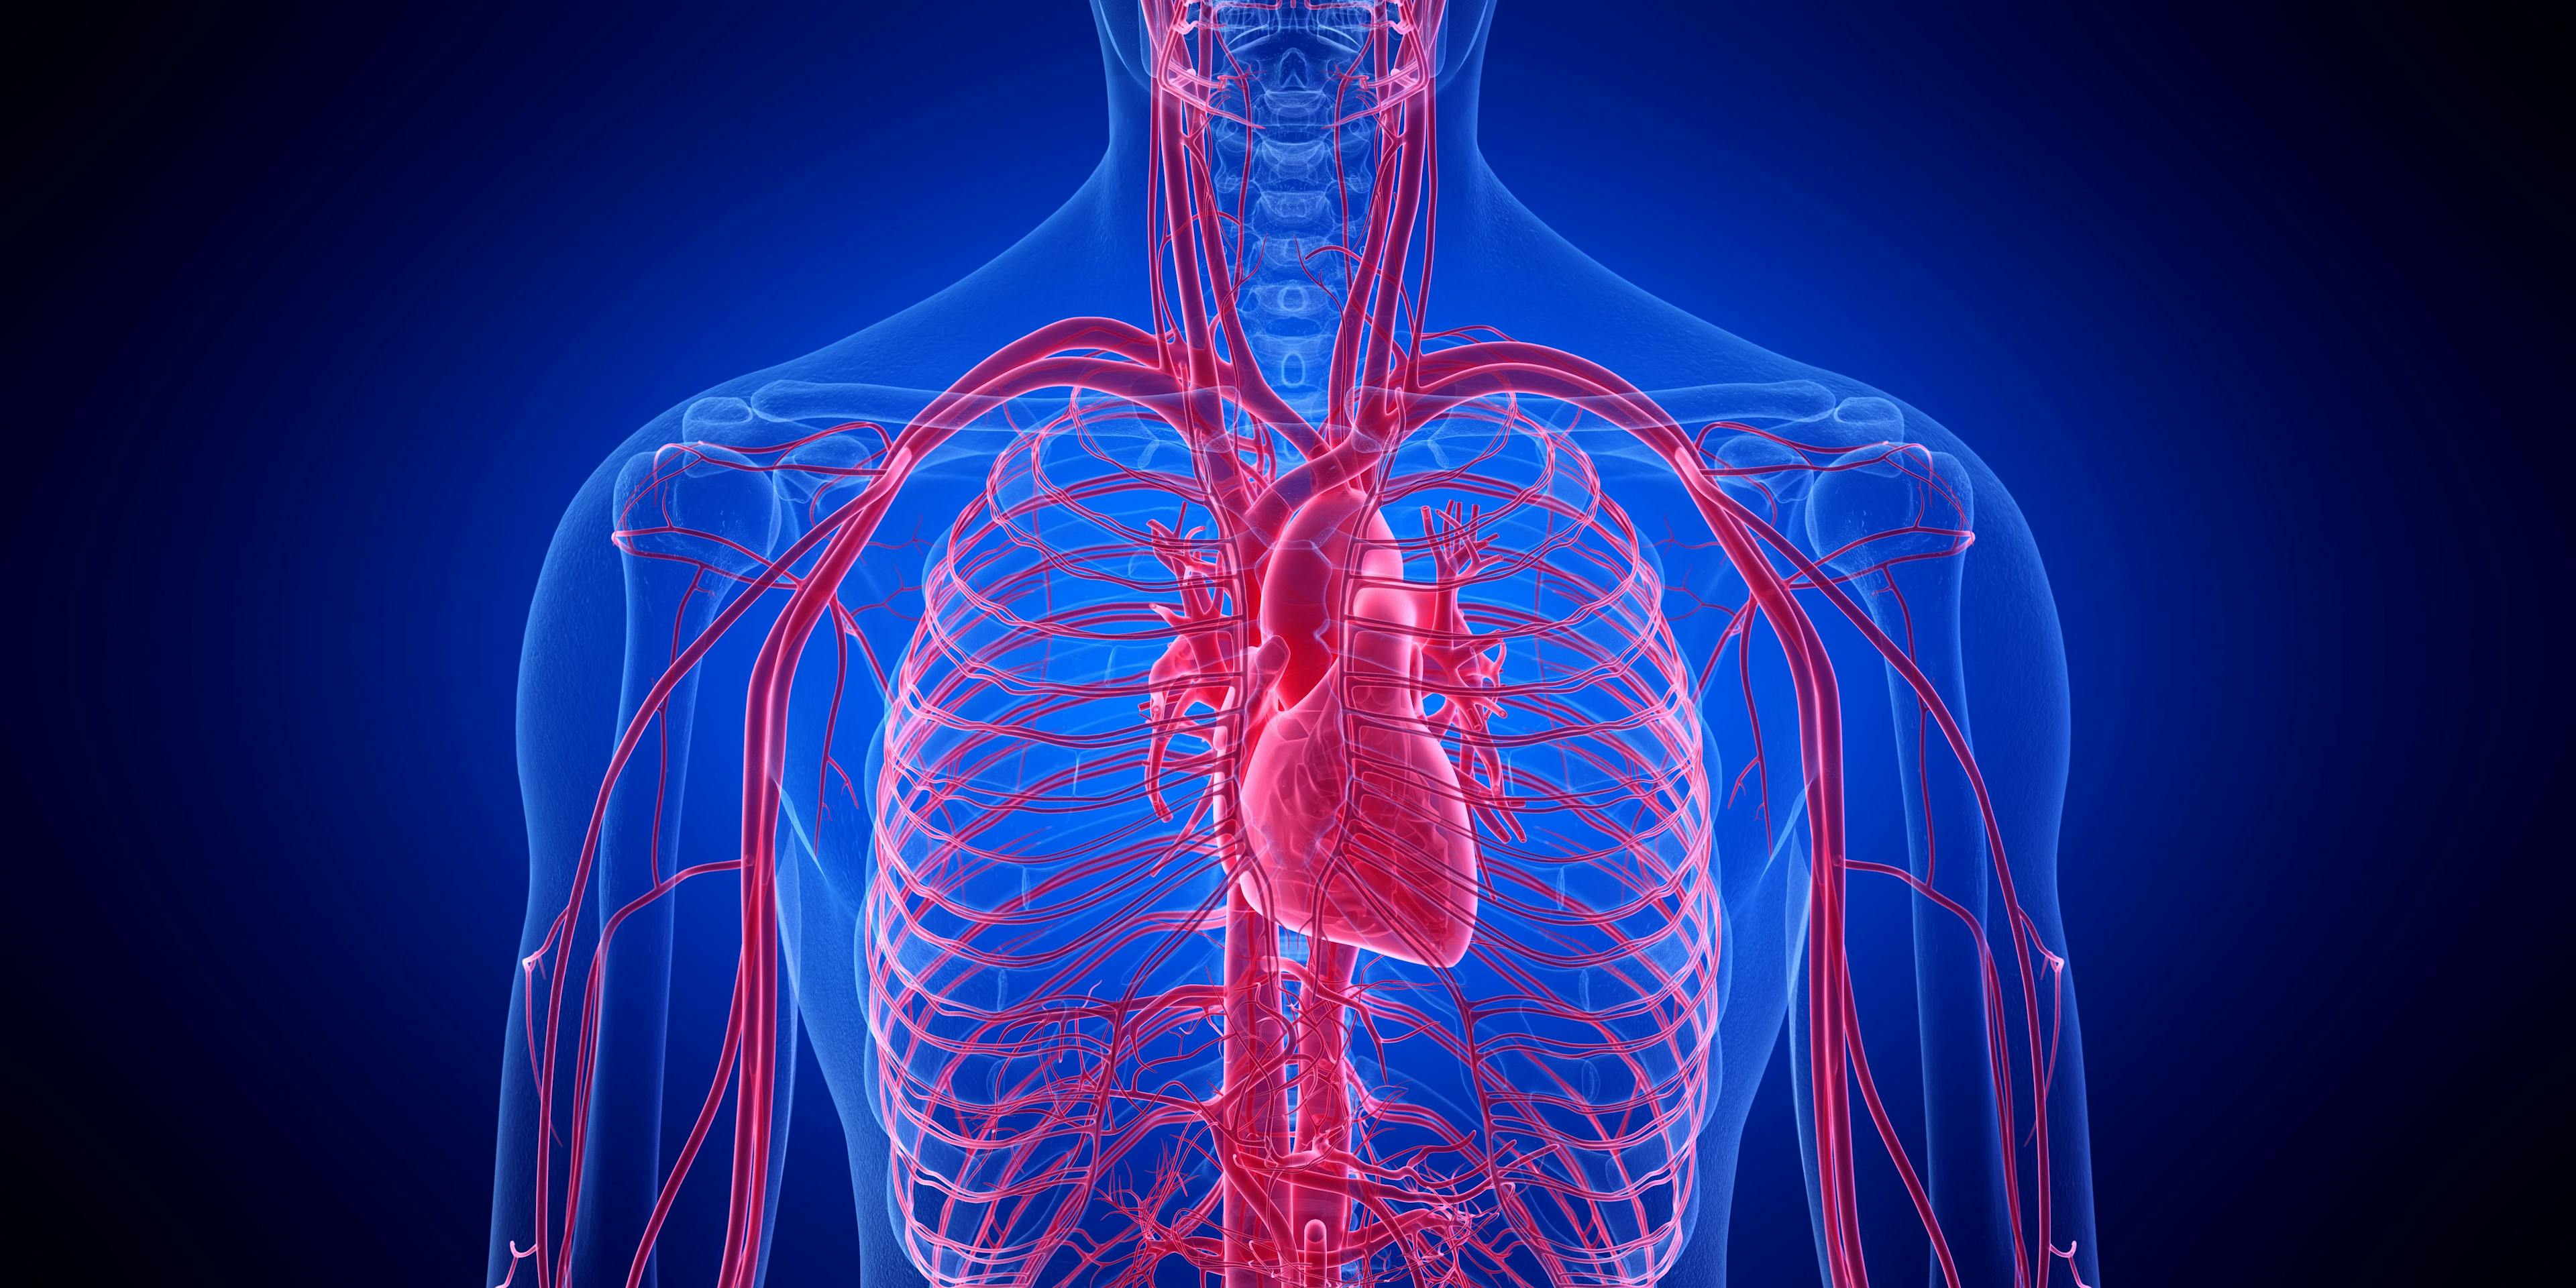 3d rendered medically accurate illustration of the human heart - Image credit: Sebastian Kaulitzki | stock.adobe.com 